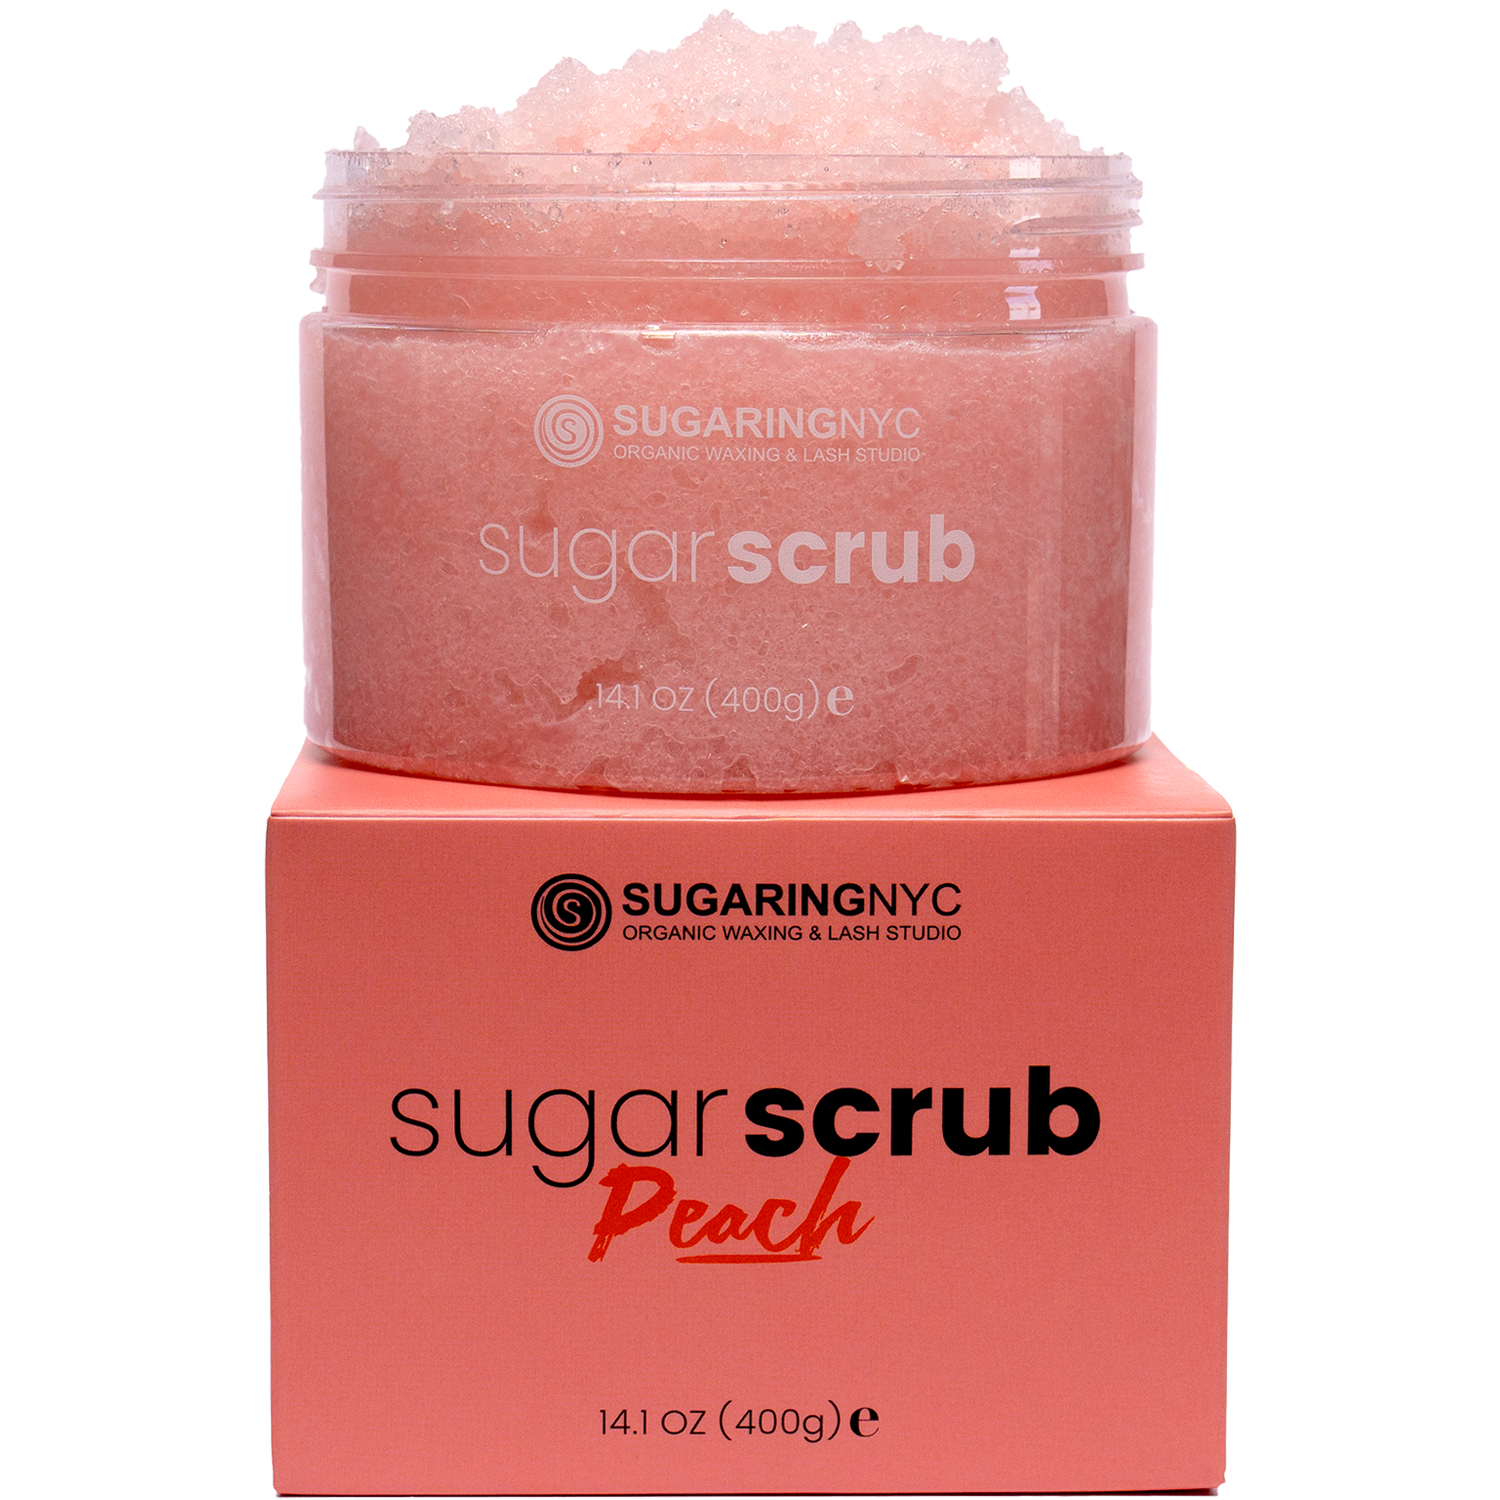 Sugaring NYC Signature Sugar Scrub – Juicy Peach